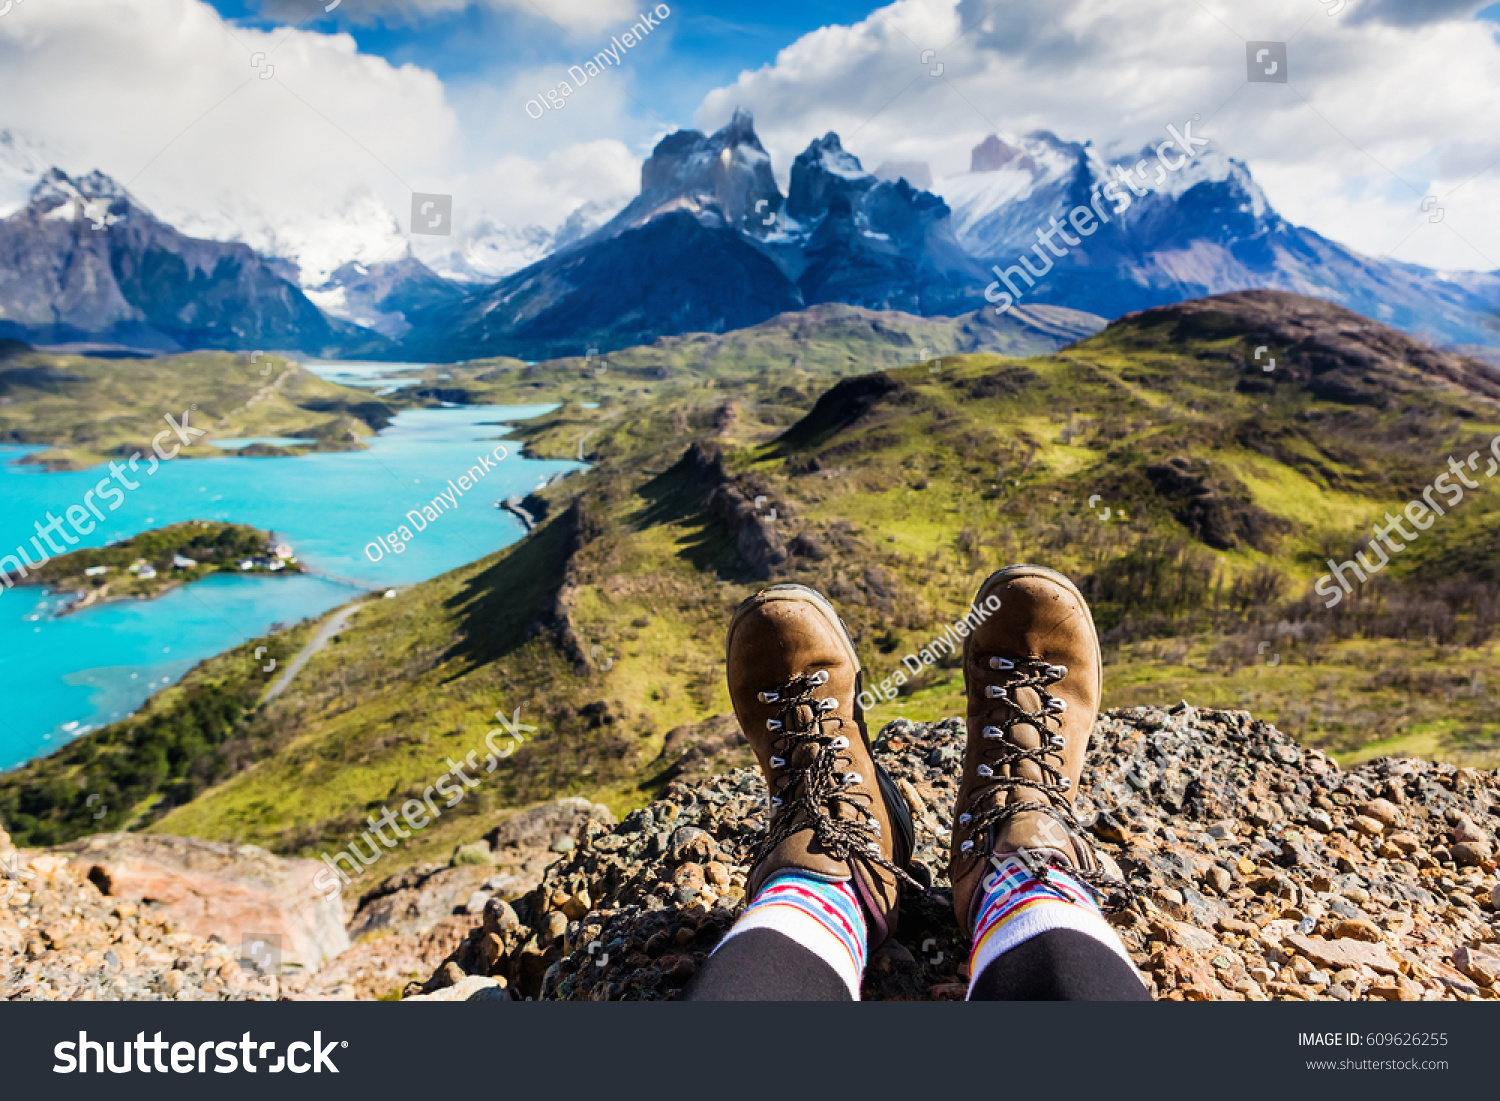 Girl hiking boots having fun and enjoying wonderful breathtaking mountain view. Freedom concept. Los Cuernos rocks, Patagonia, Chile #609626255